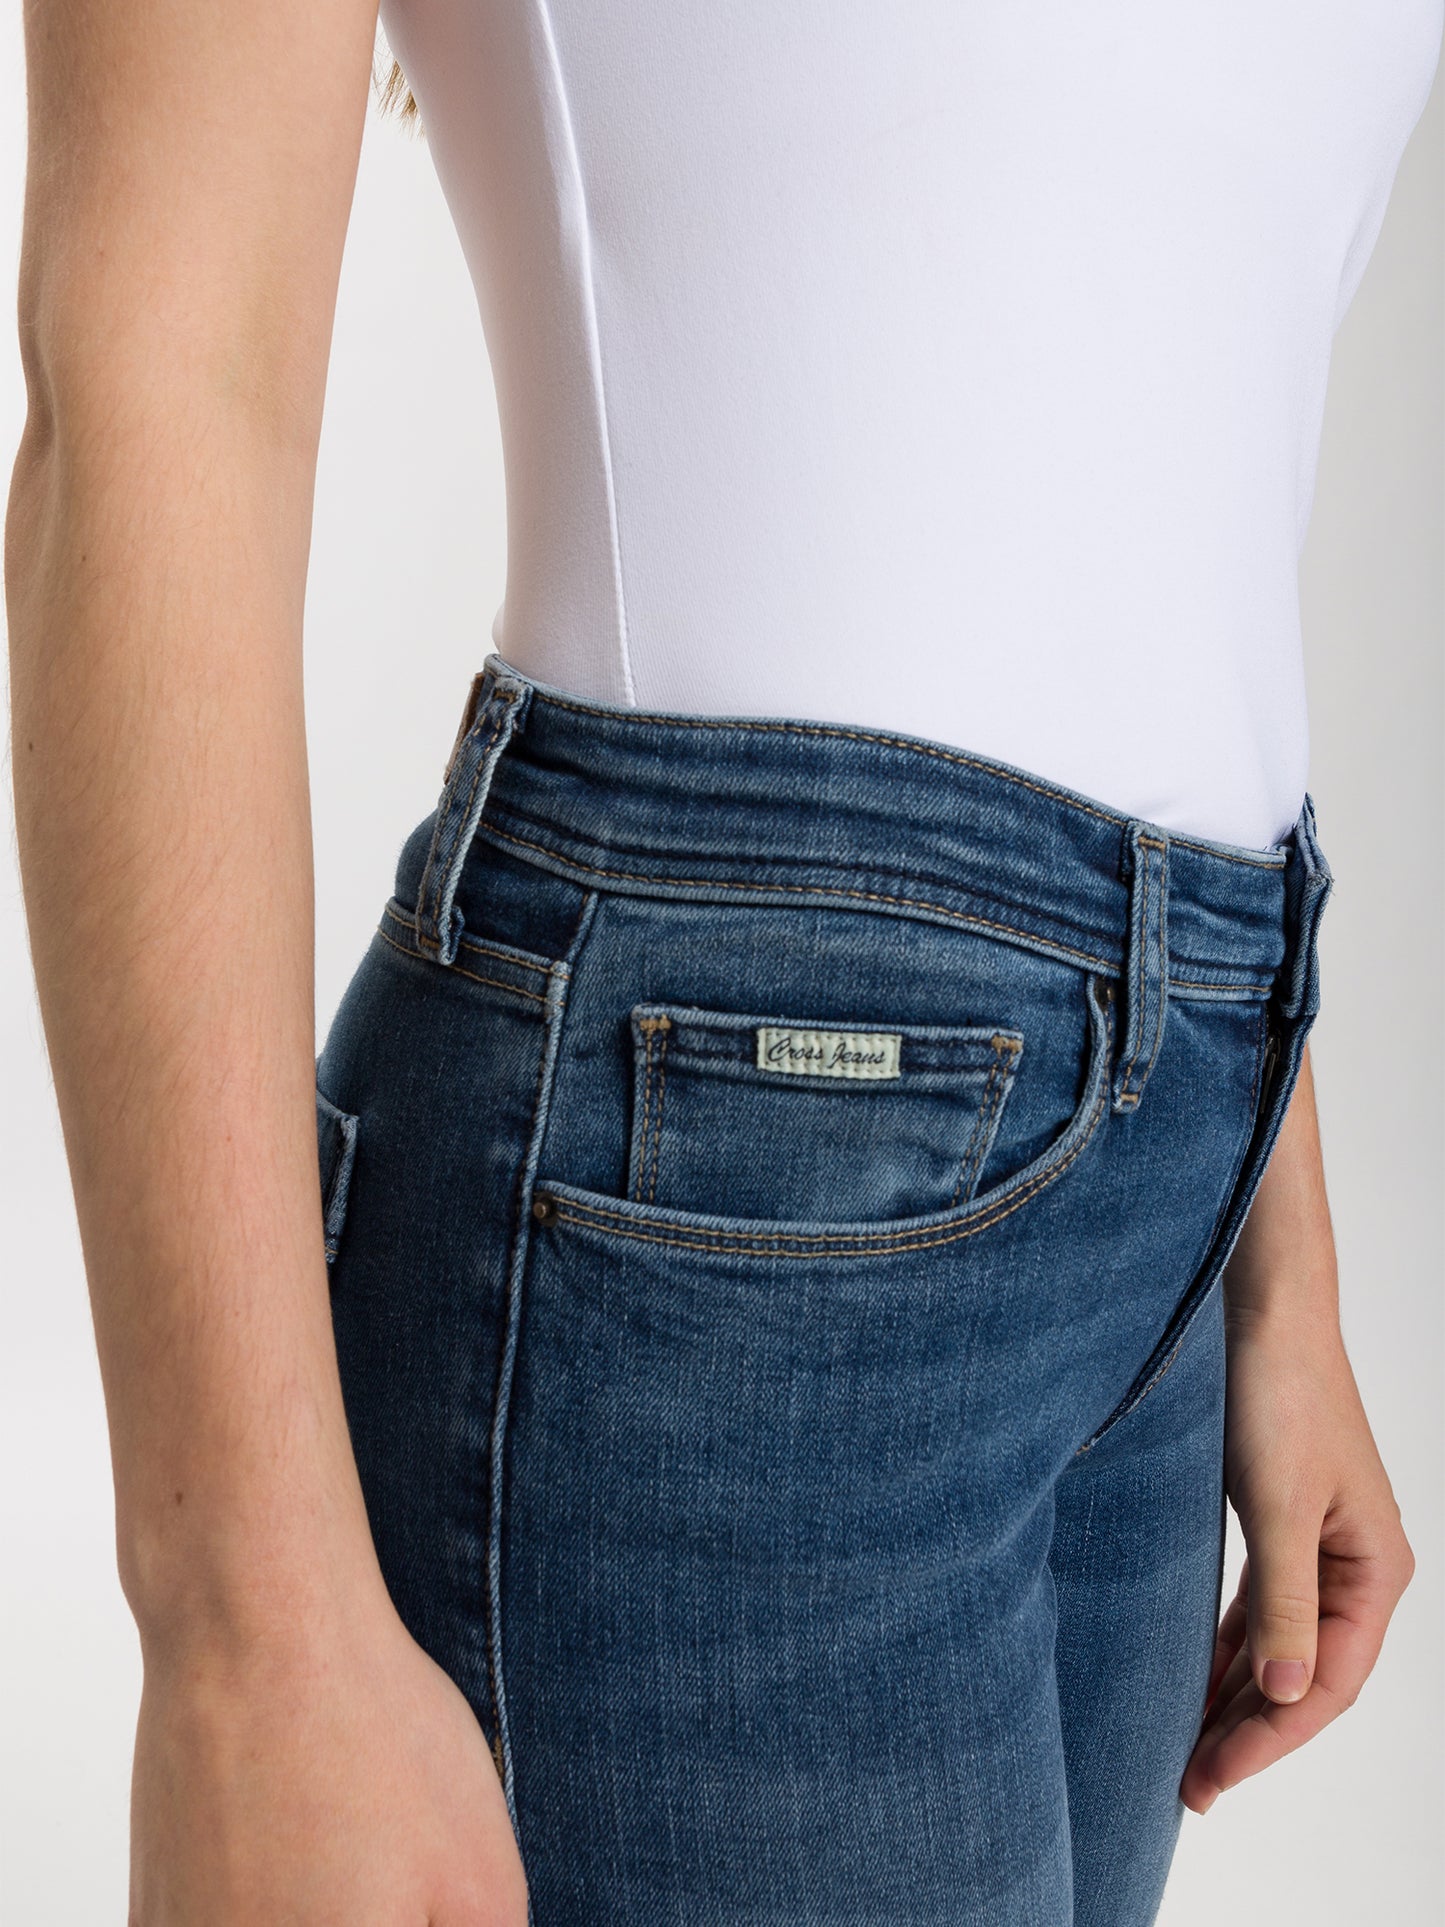 Anya women's jeans slim fit high waist medium blue